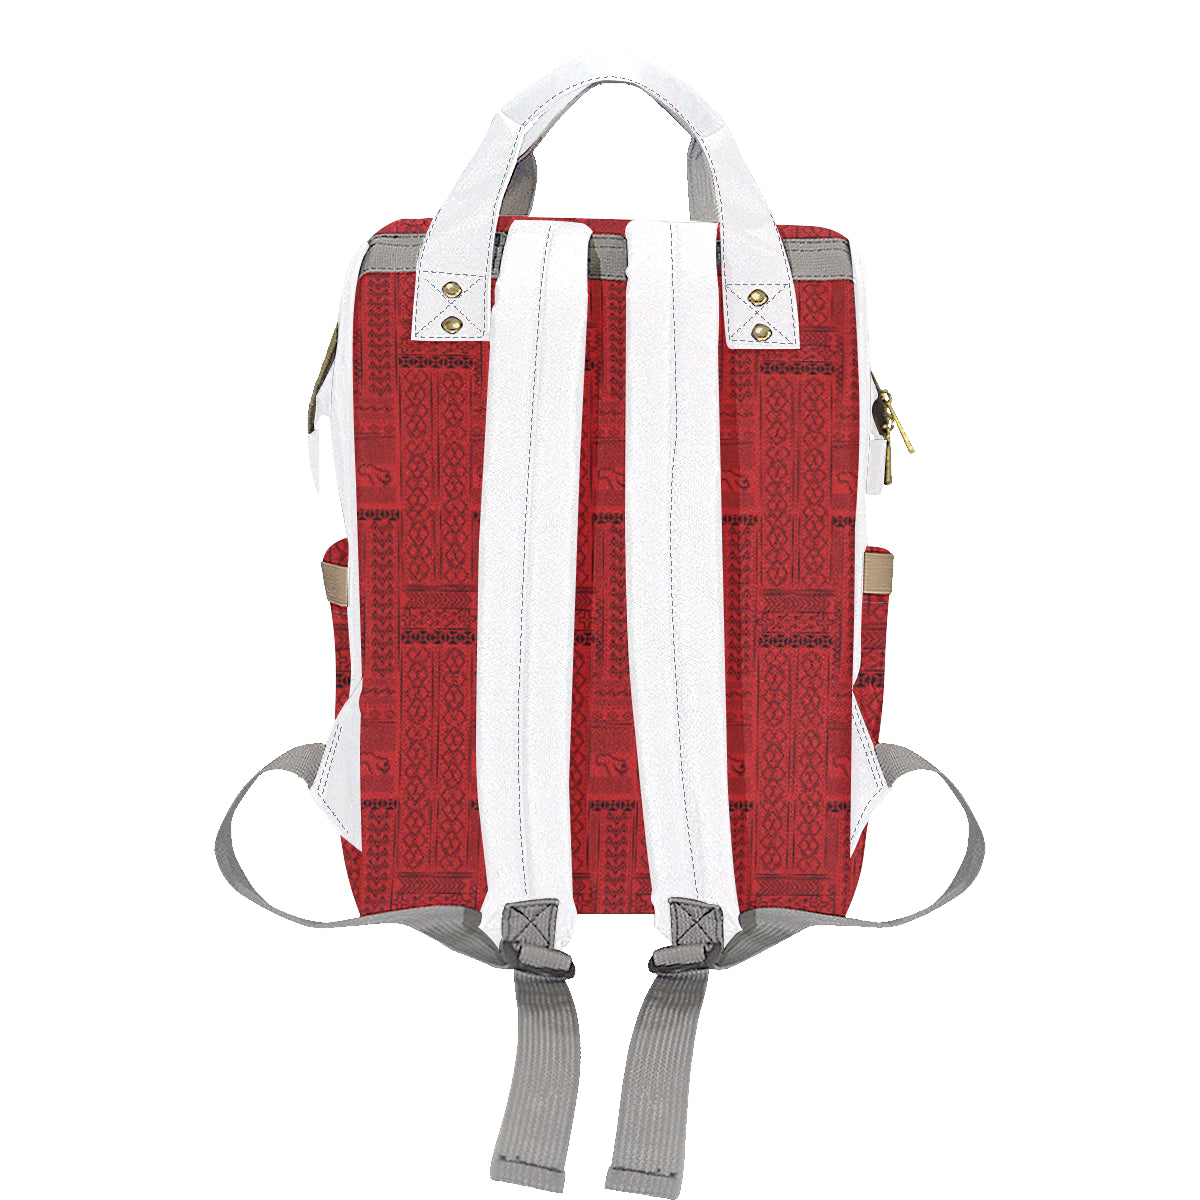 AfriBix Warrior Tribal Print Multi-Function Backpack